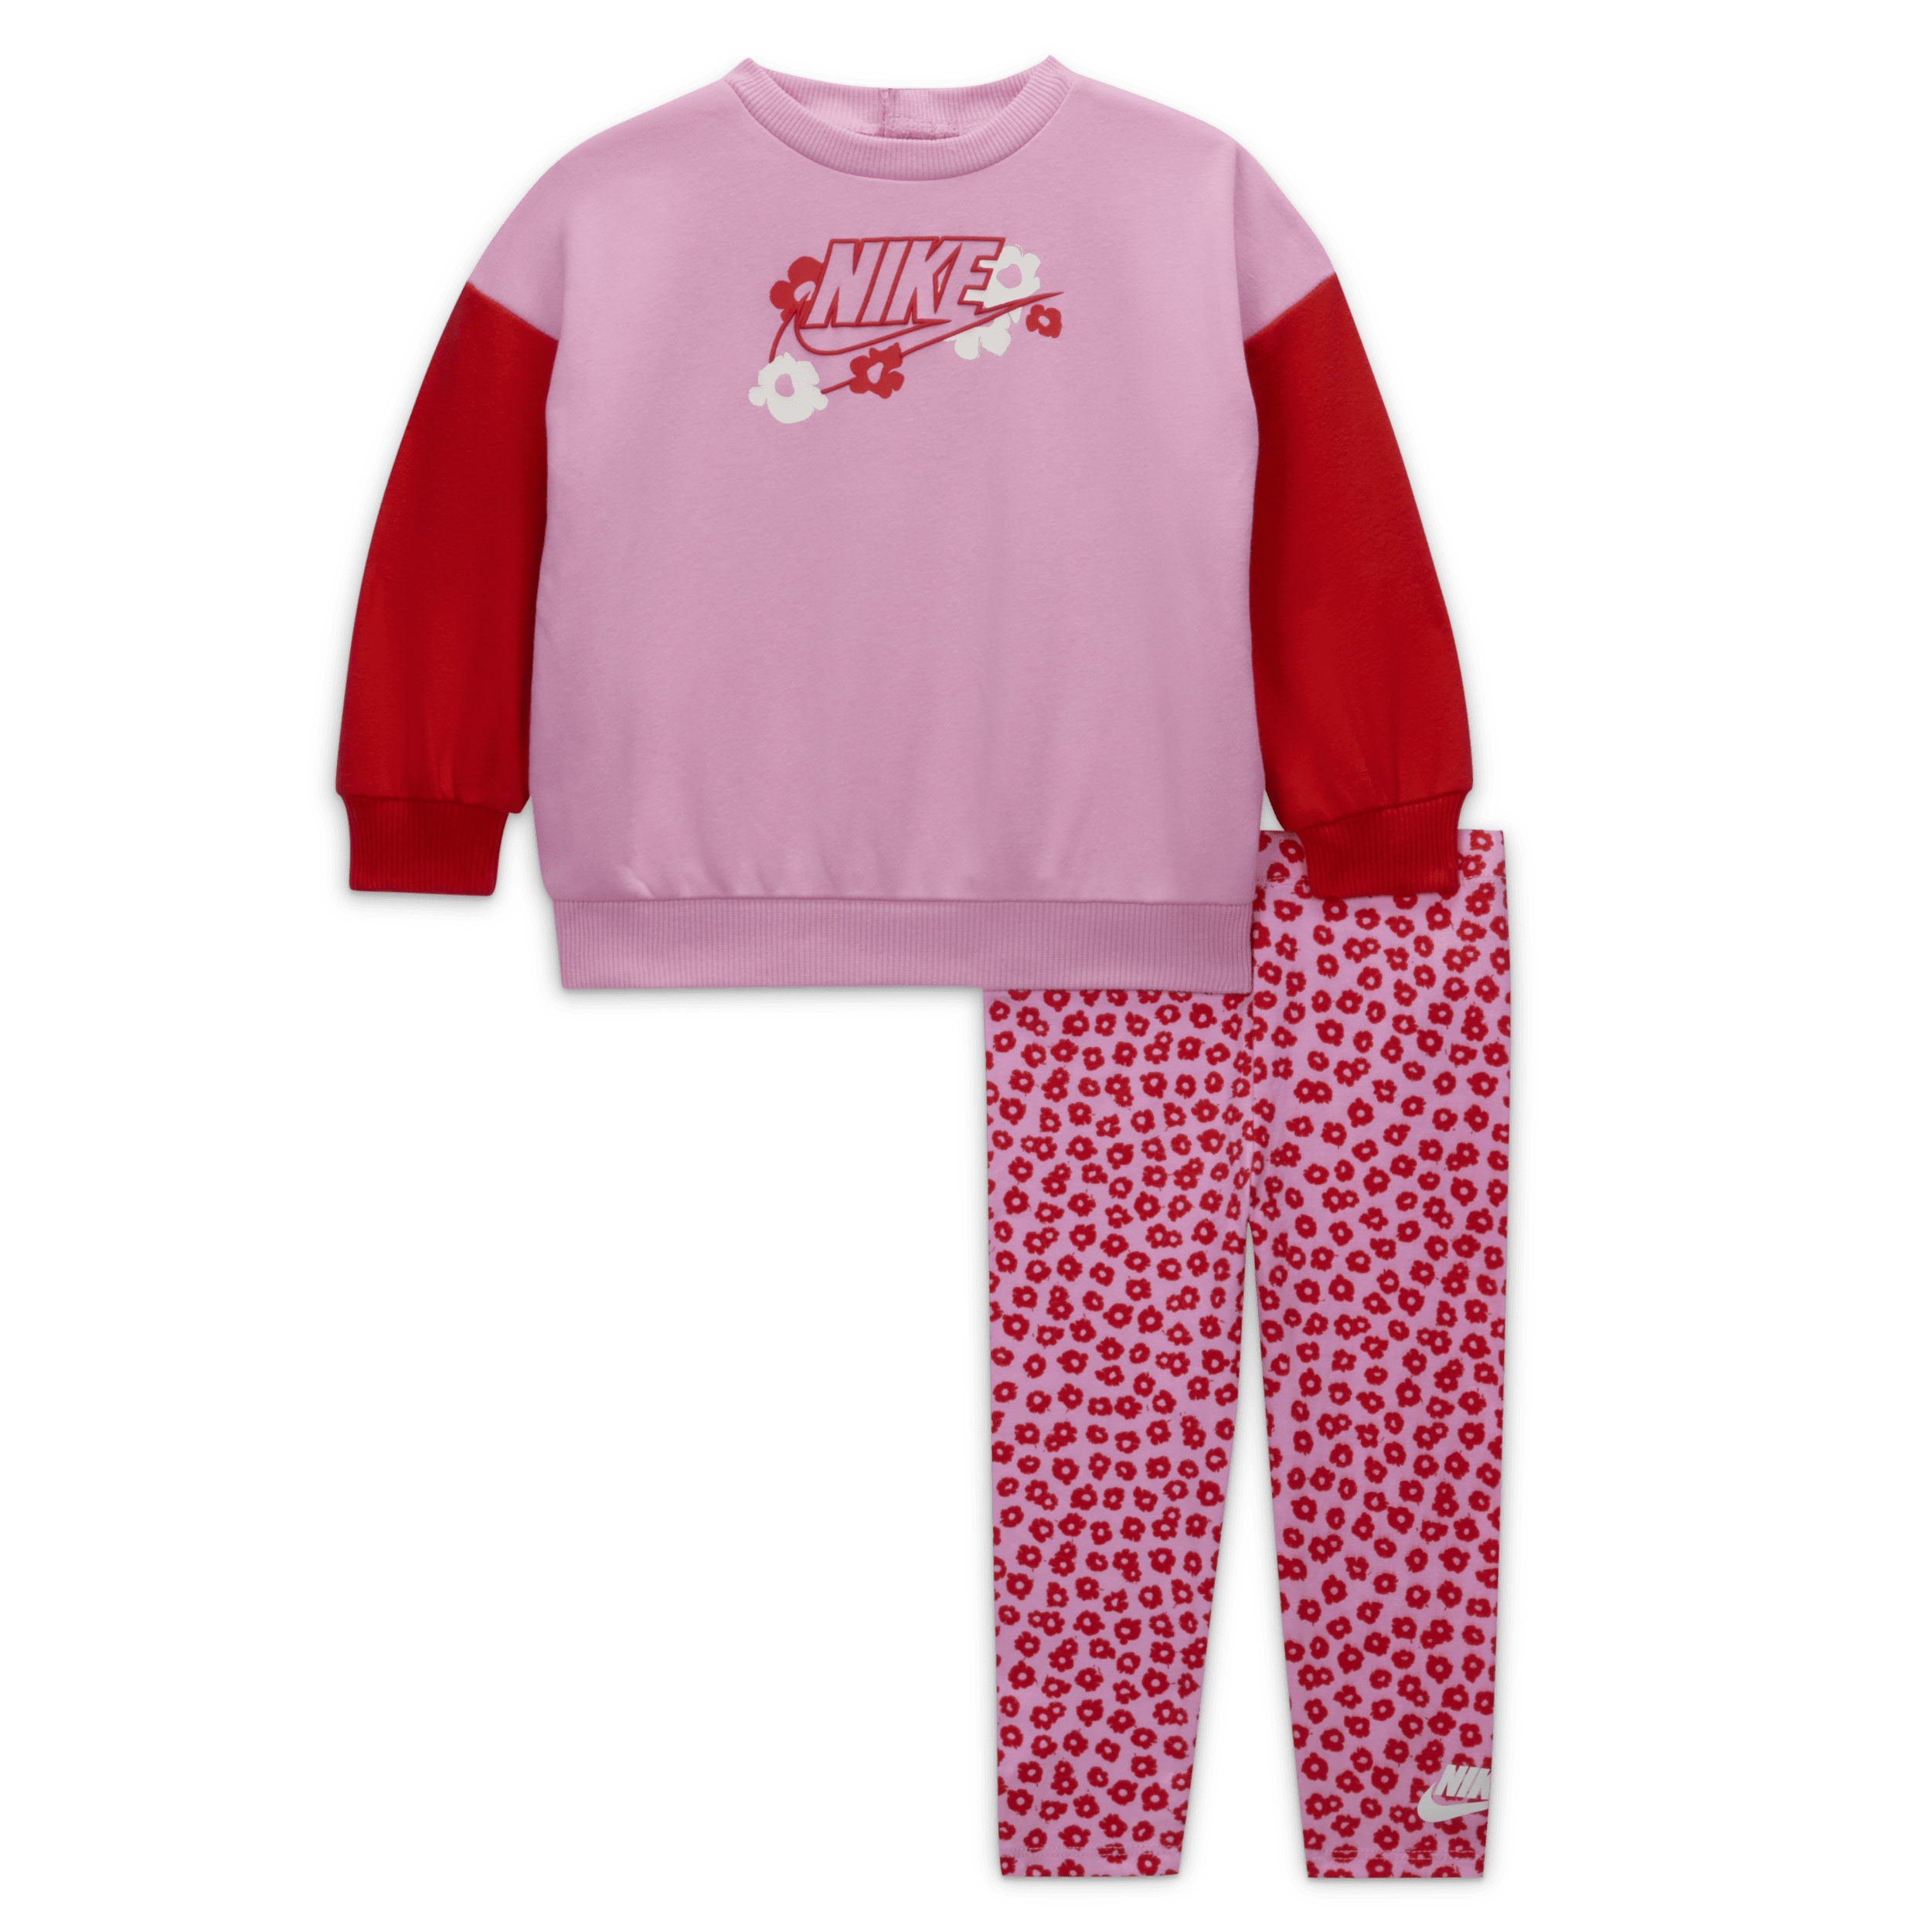 Completo leggings Nike Floral – Bebè (12-24 mesi) - Rosa